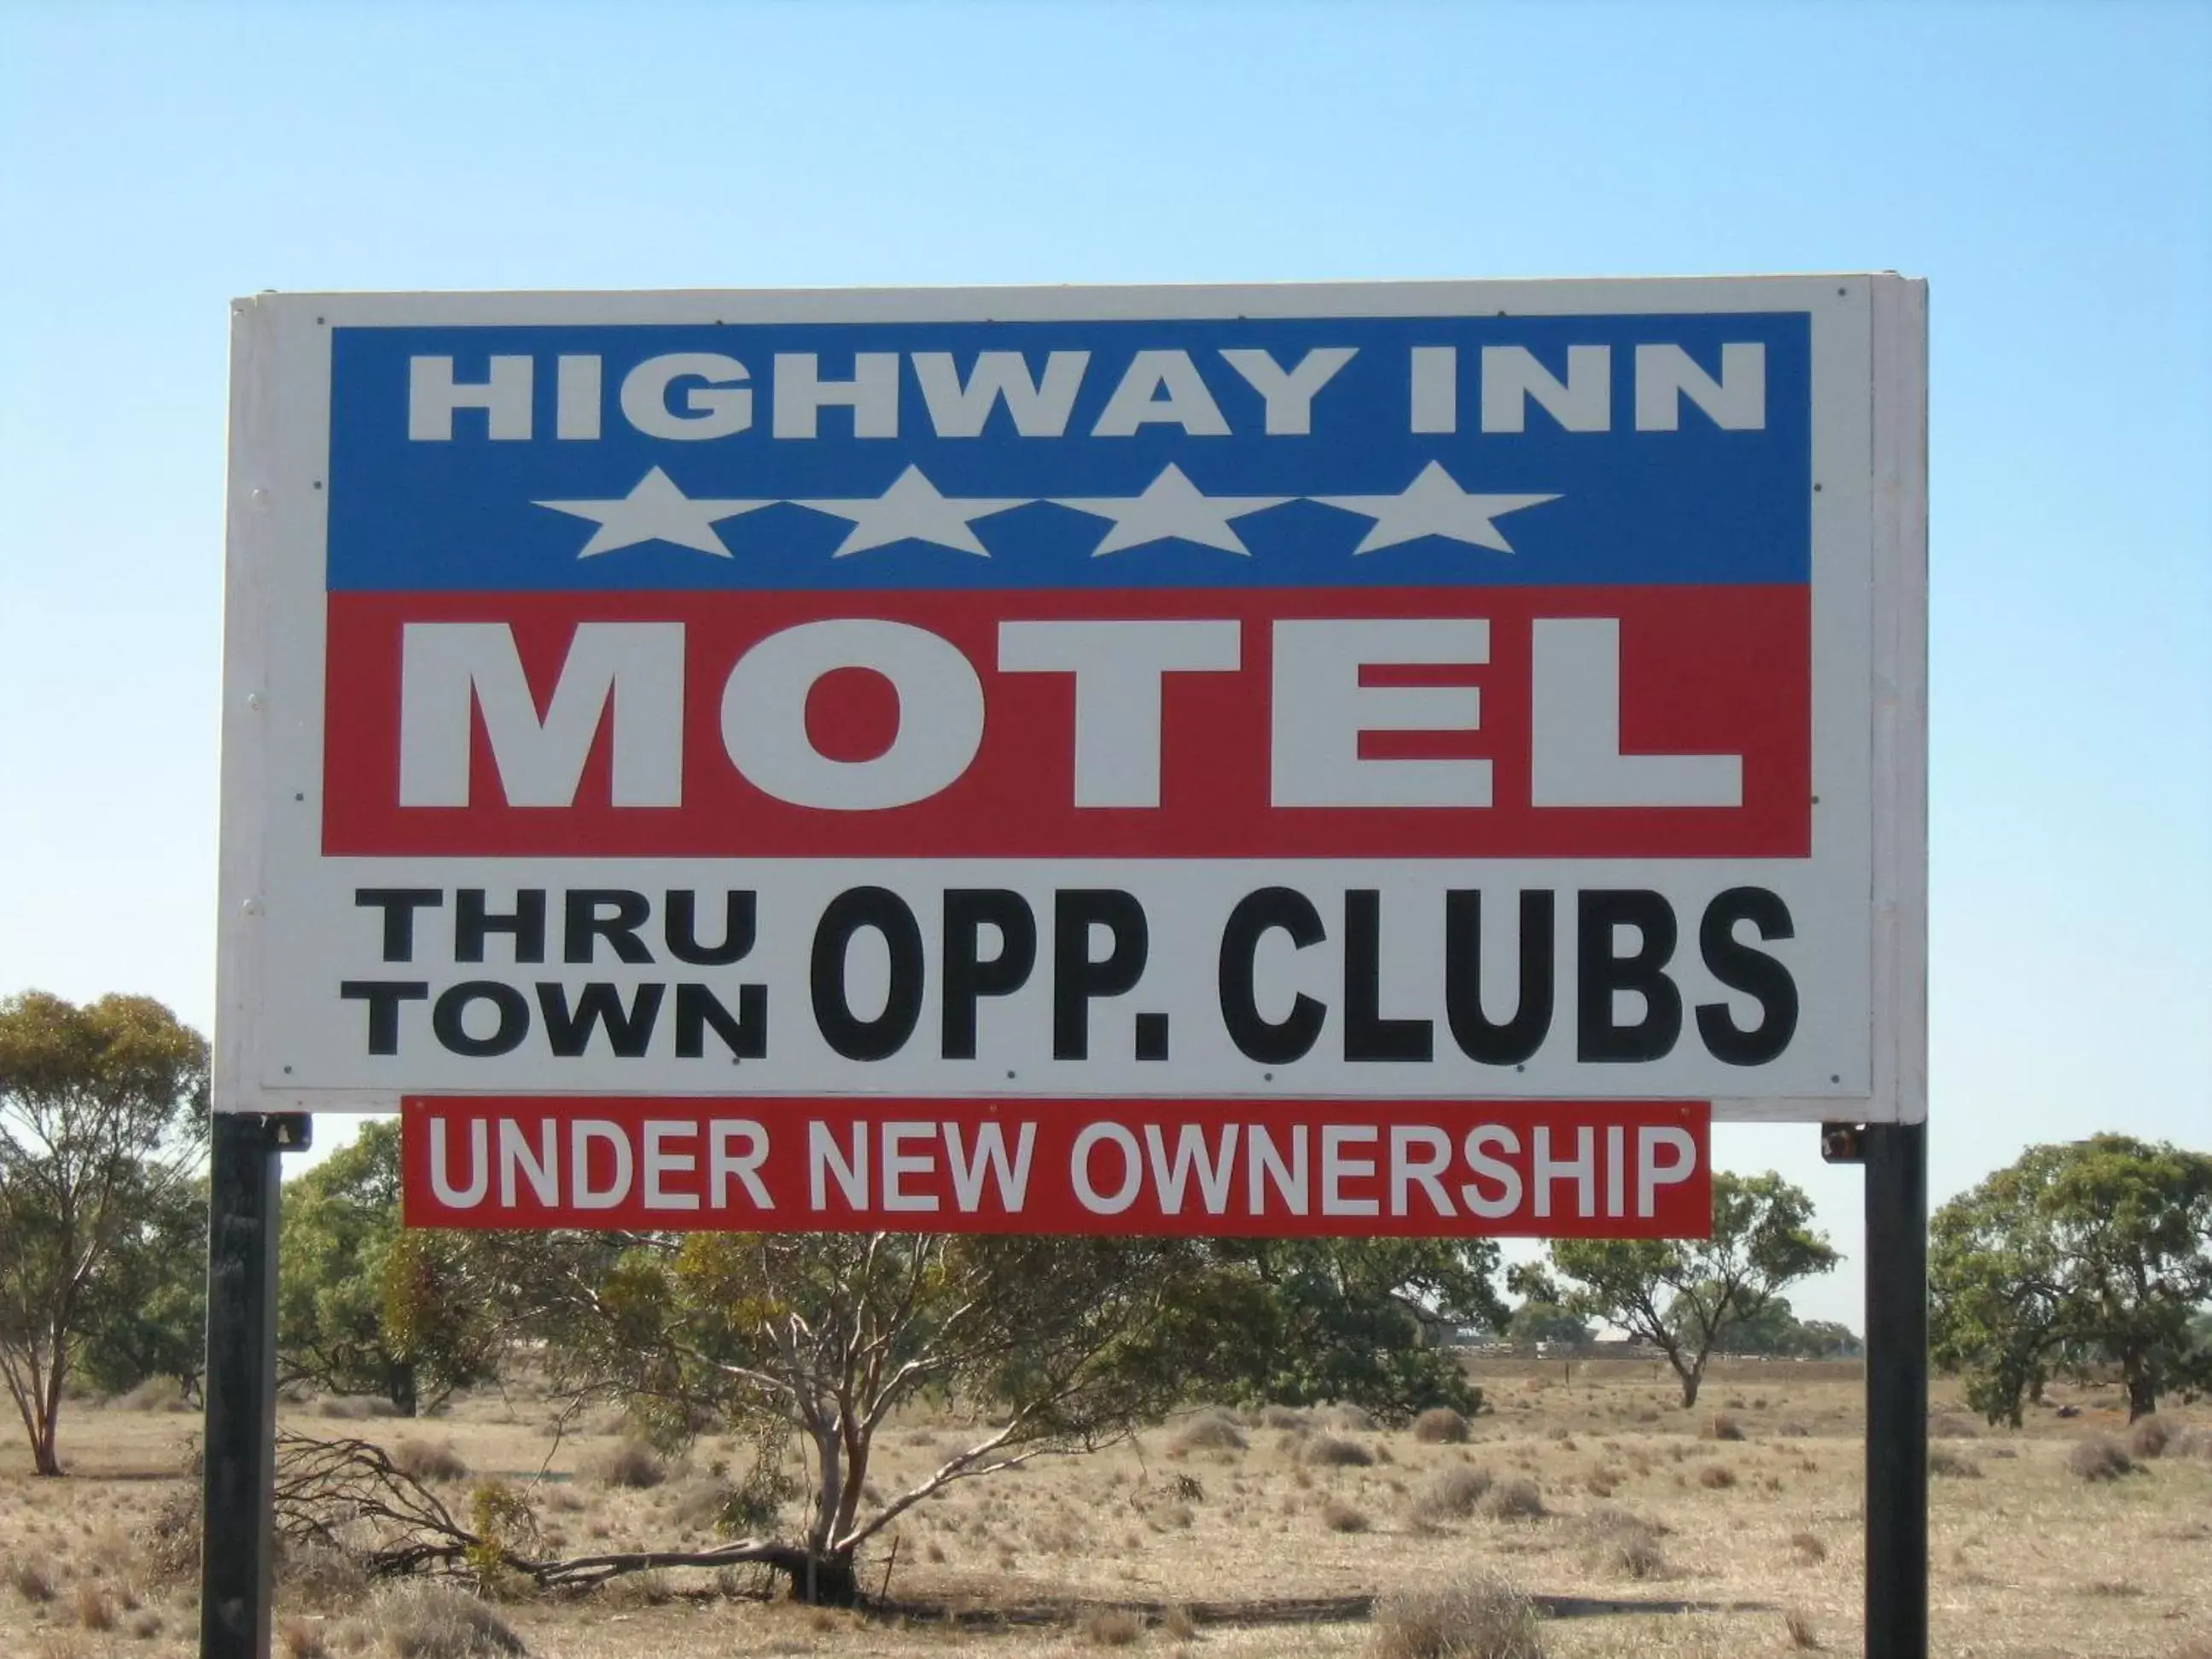 Day in Highway Inn Motel